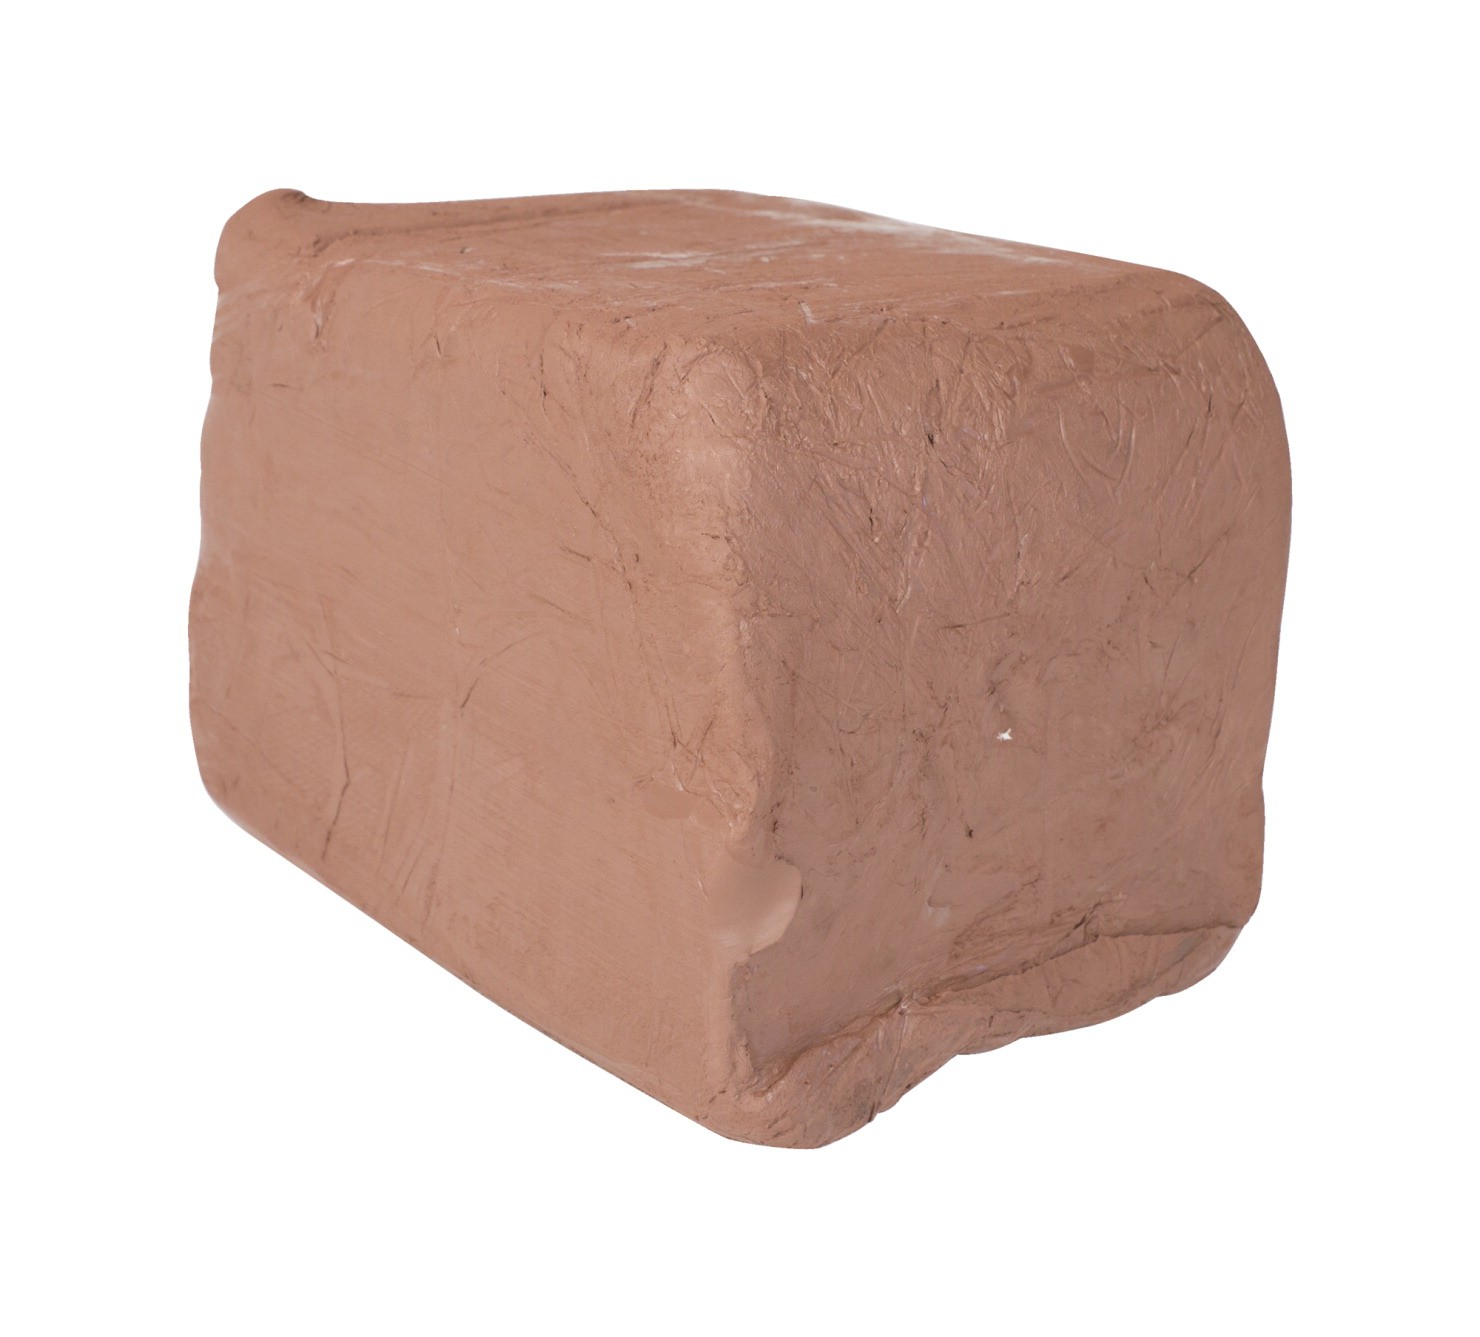 Amaco Sedona Red Clay, Cones 06-05 #67M, 25 lb Bag - 2/Box (50 Lbs)